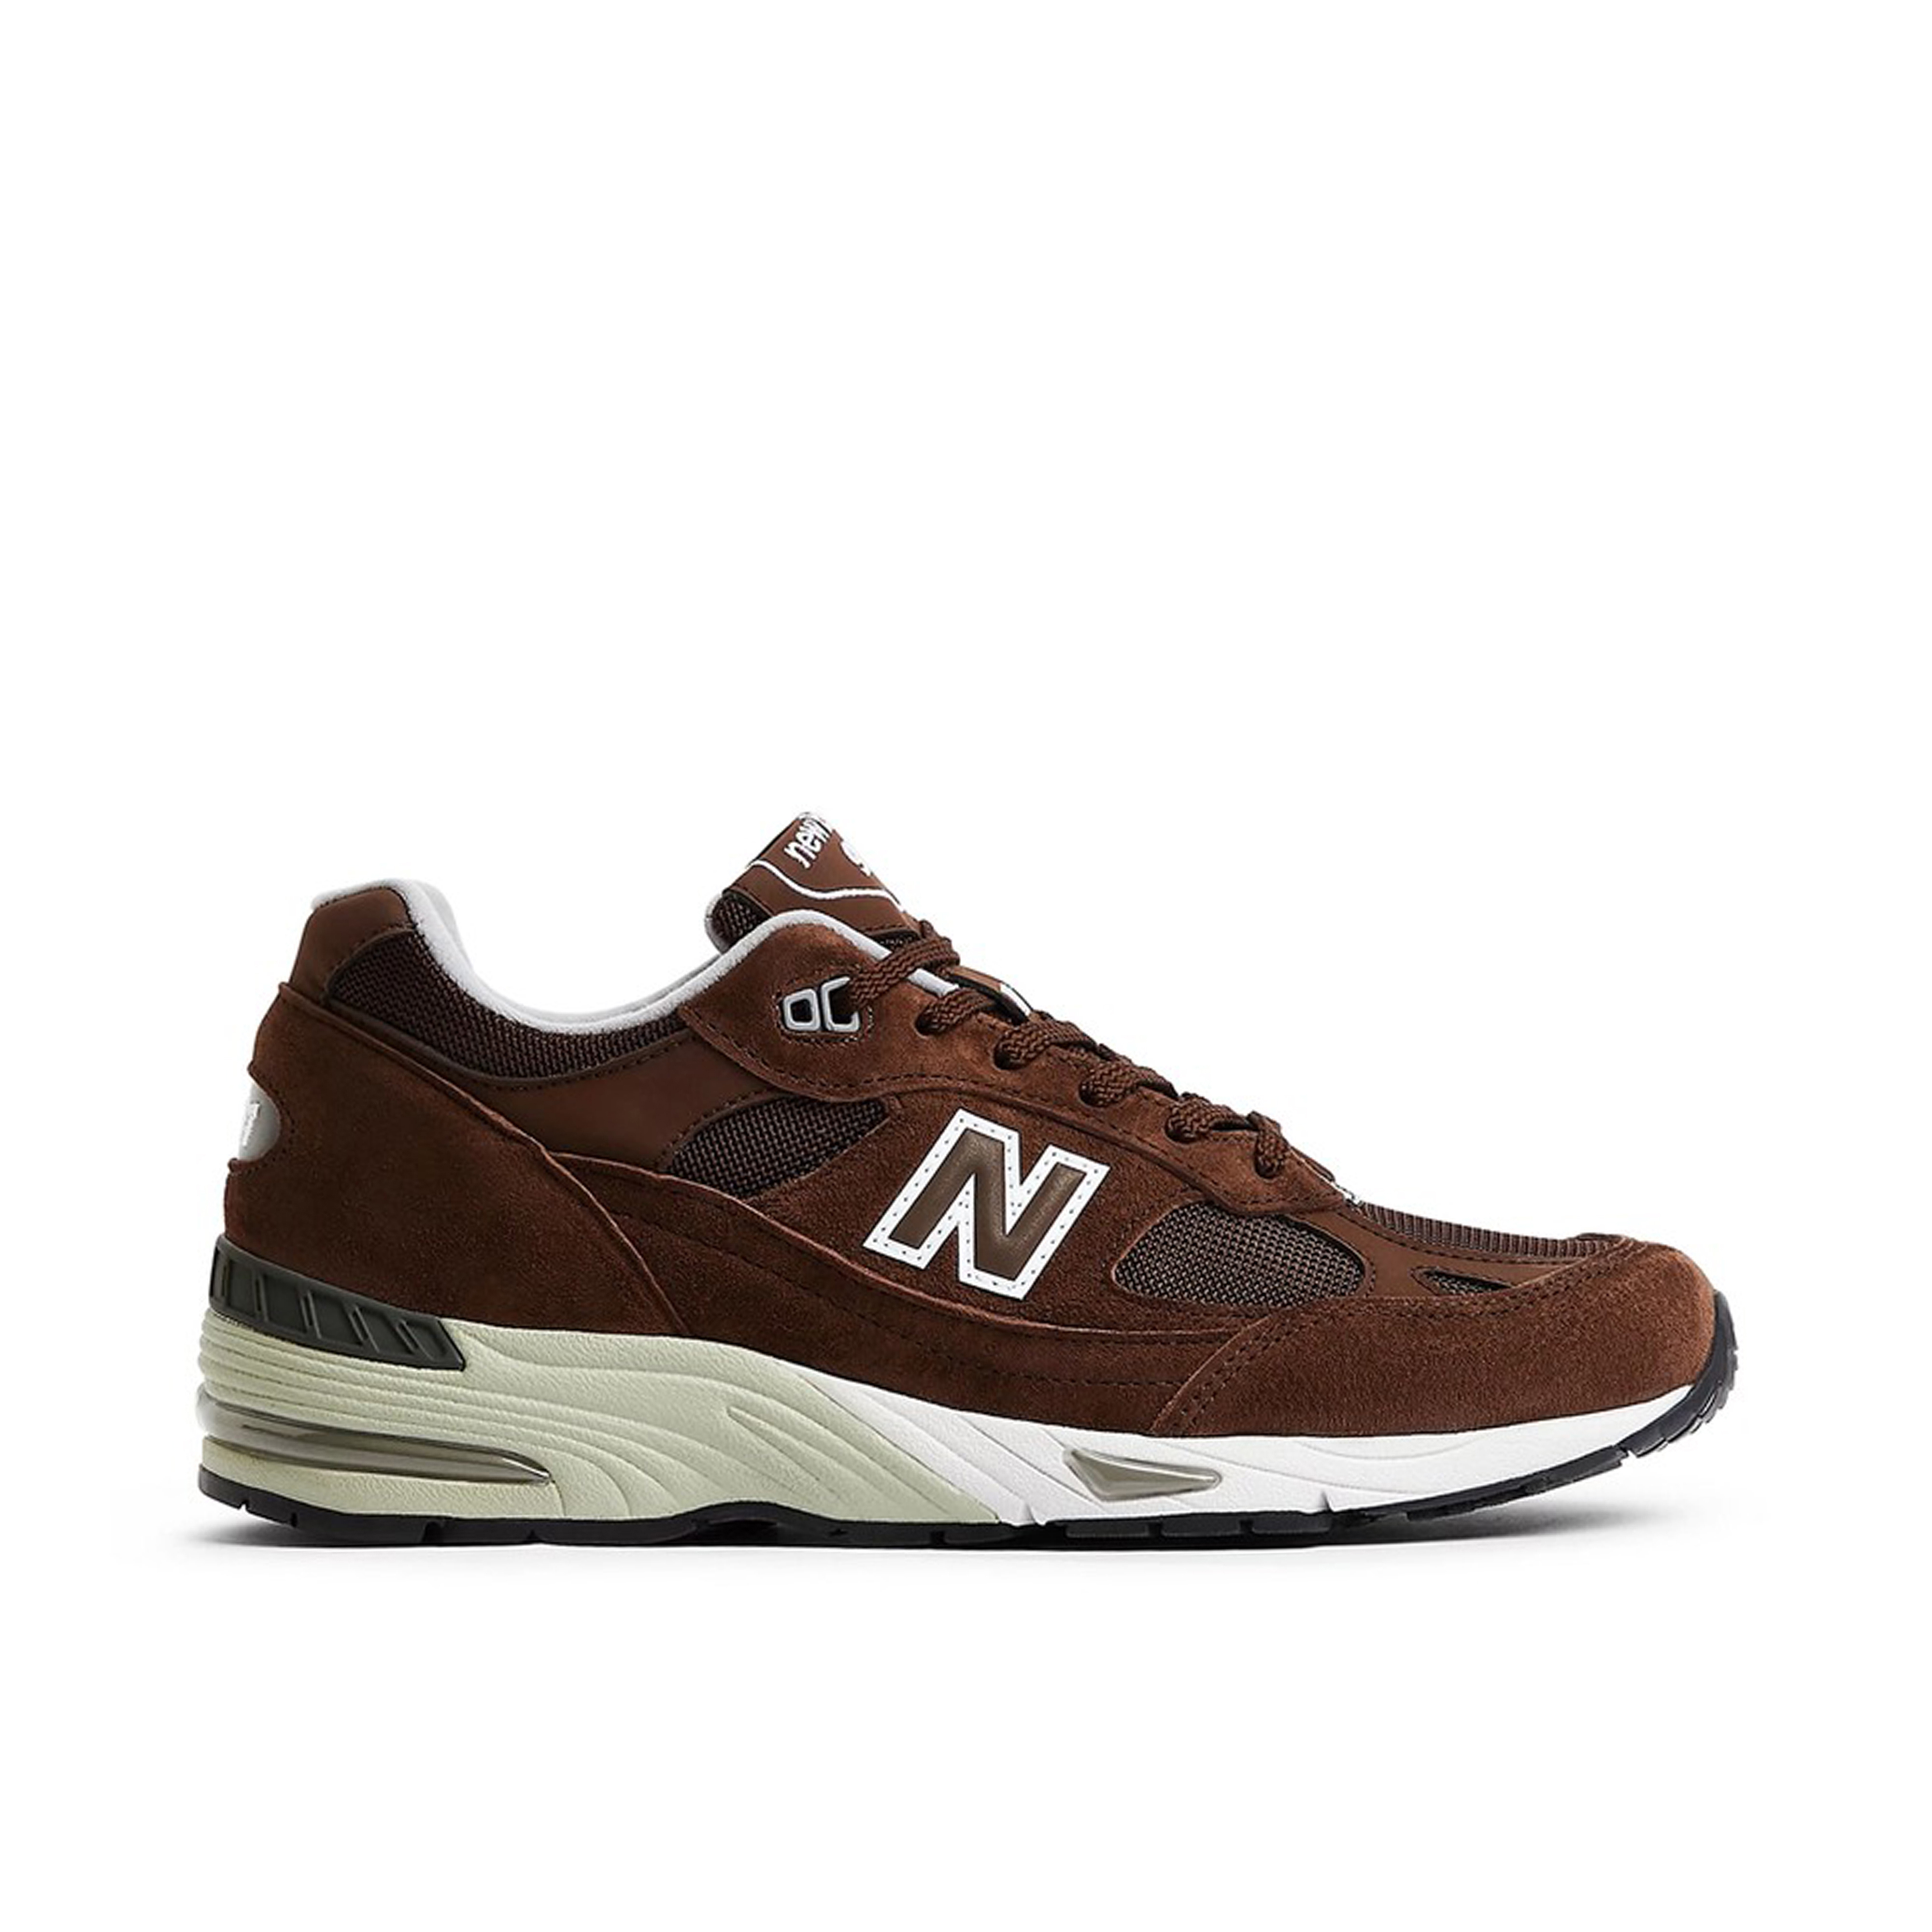 New Balance 580 “Brown” 27.5